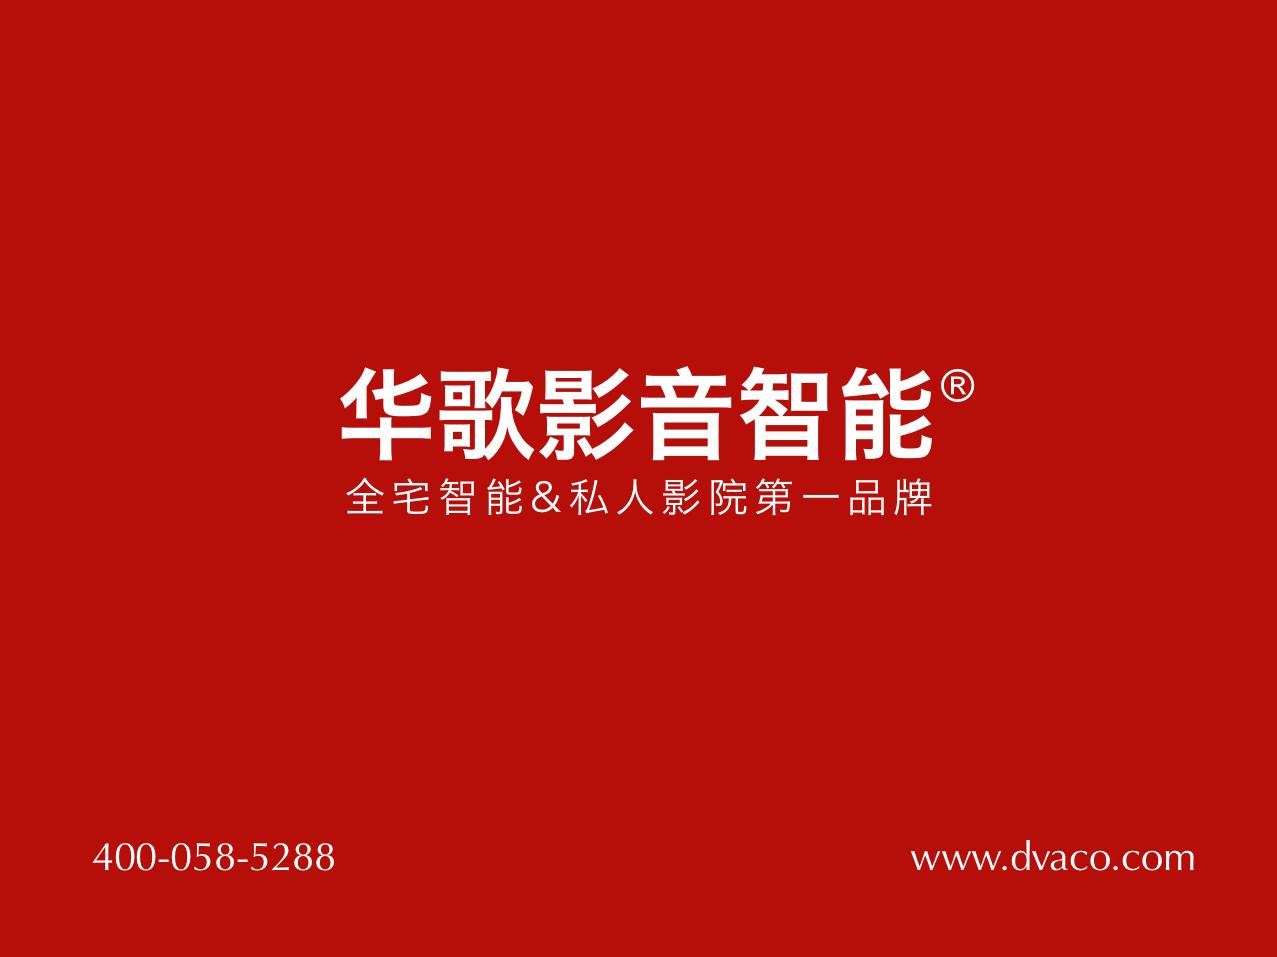 DVACO華歌智慧型影音logo